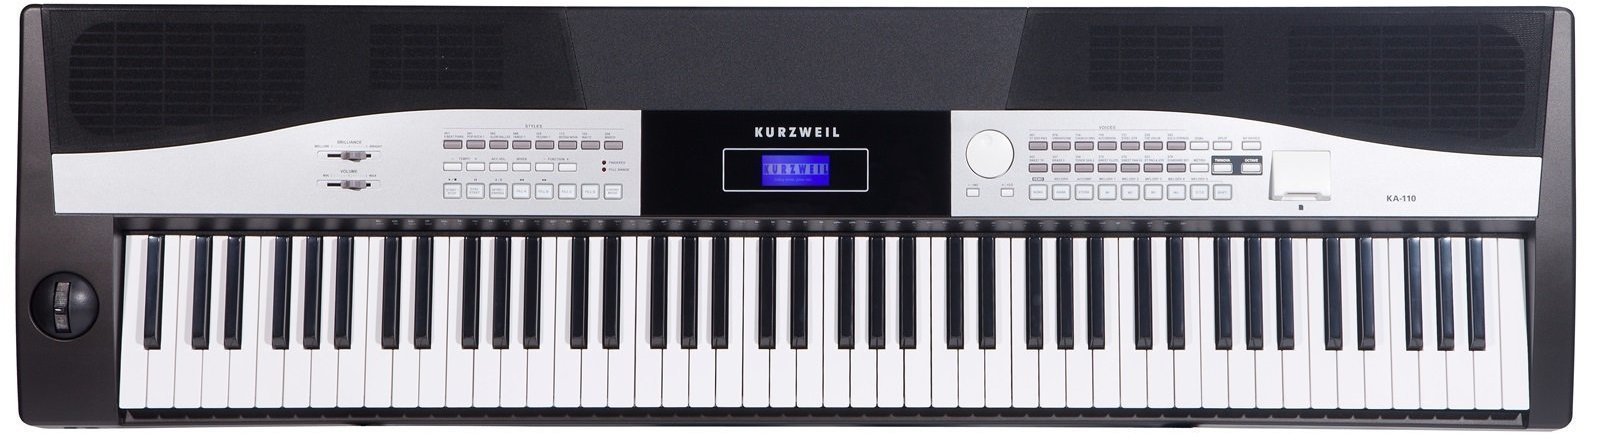 Piano de scène Kurzweil KA110